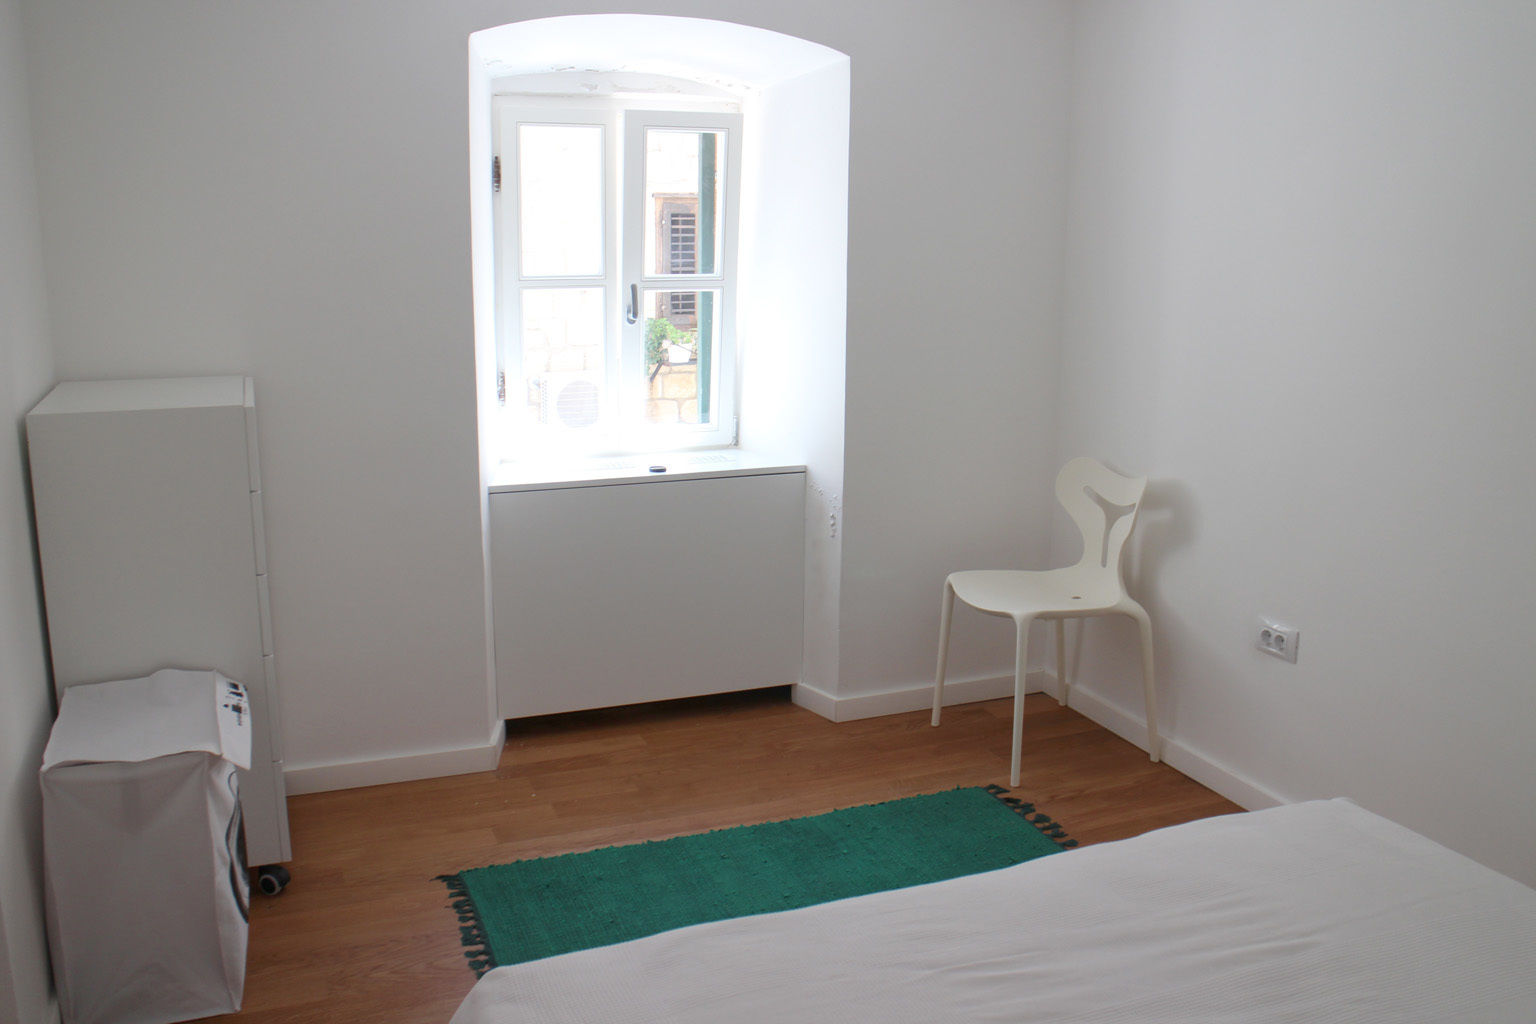 1st floor bedroom: minimalist by drawing agency ltd, Minimalist